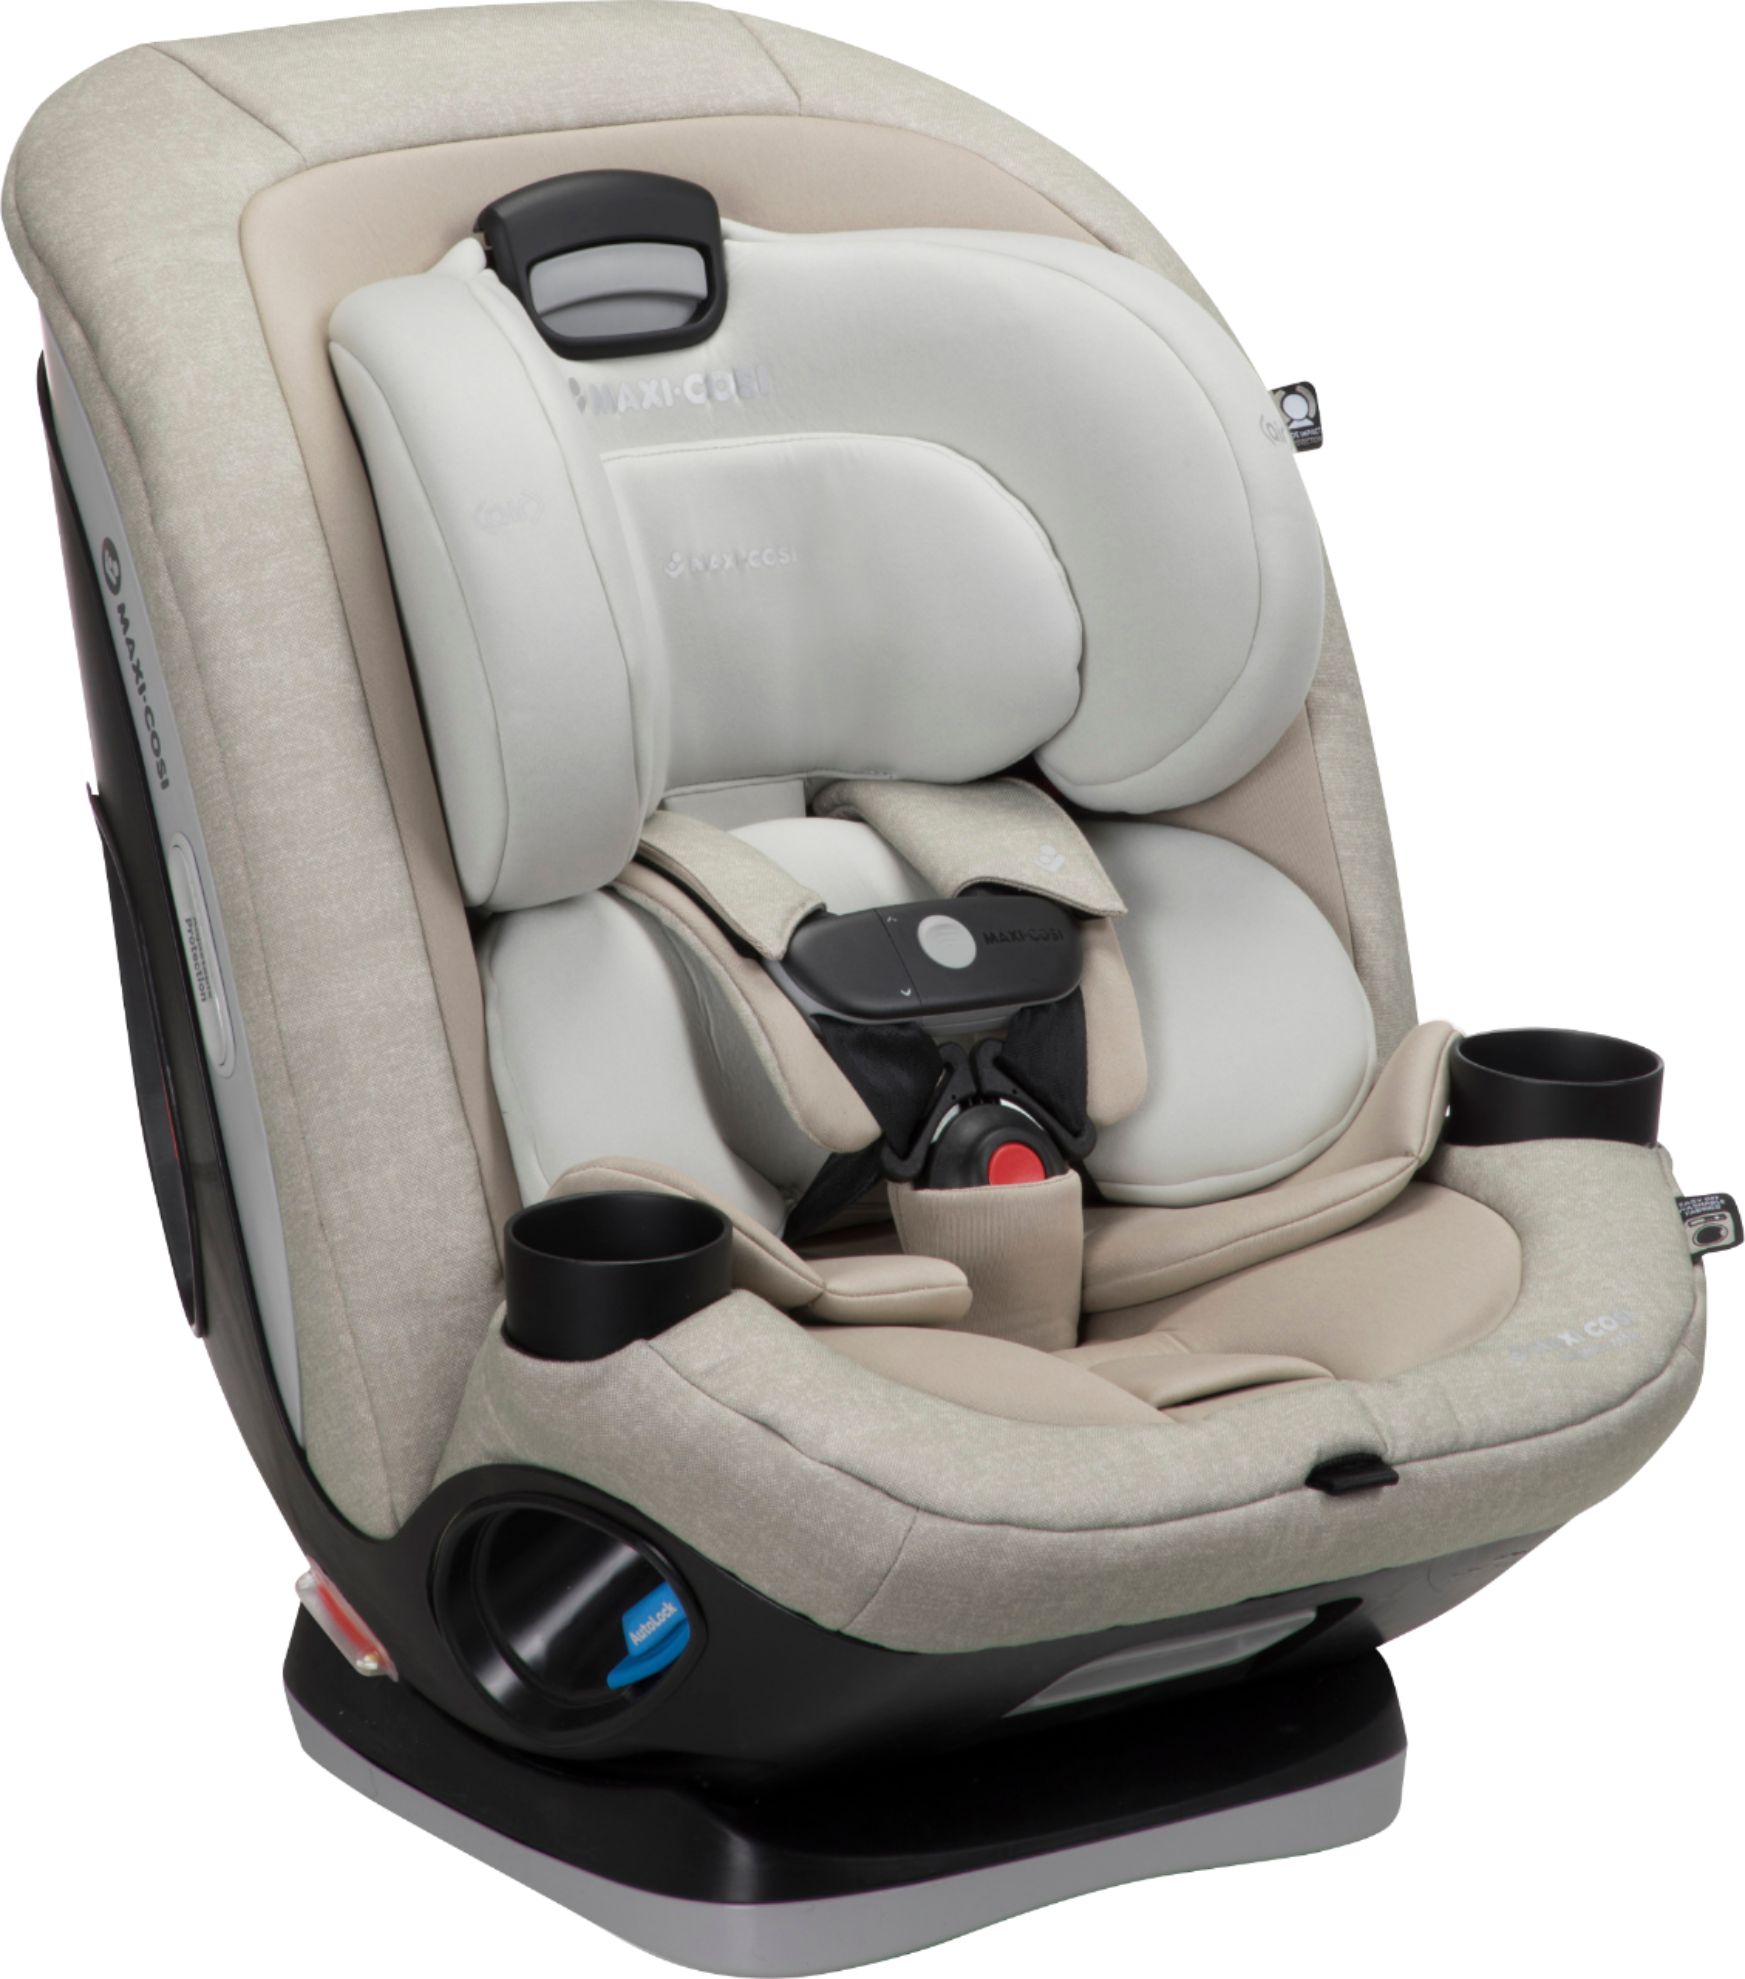 Angle View: Maxi-Cosi - Magellan® Max 5-in-1 Convertible Car Seat - Beige